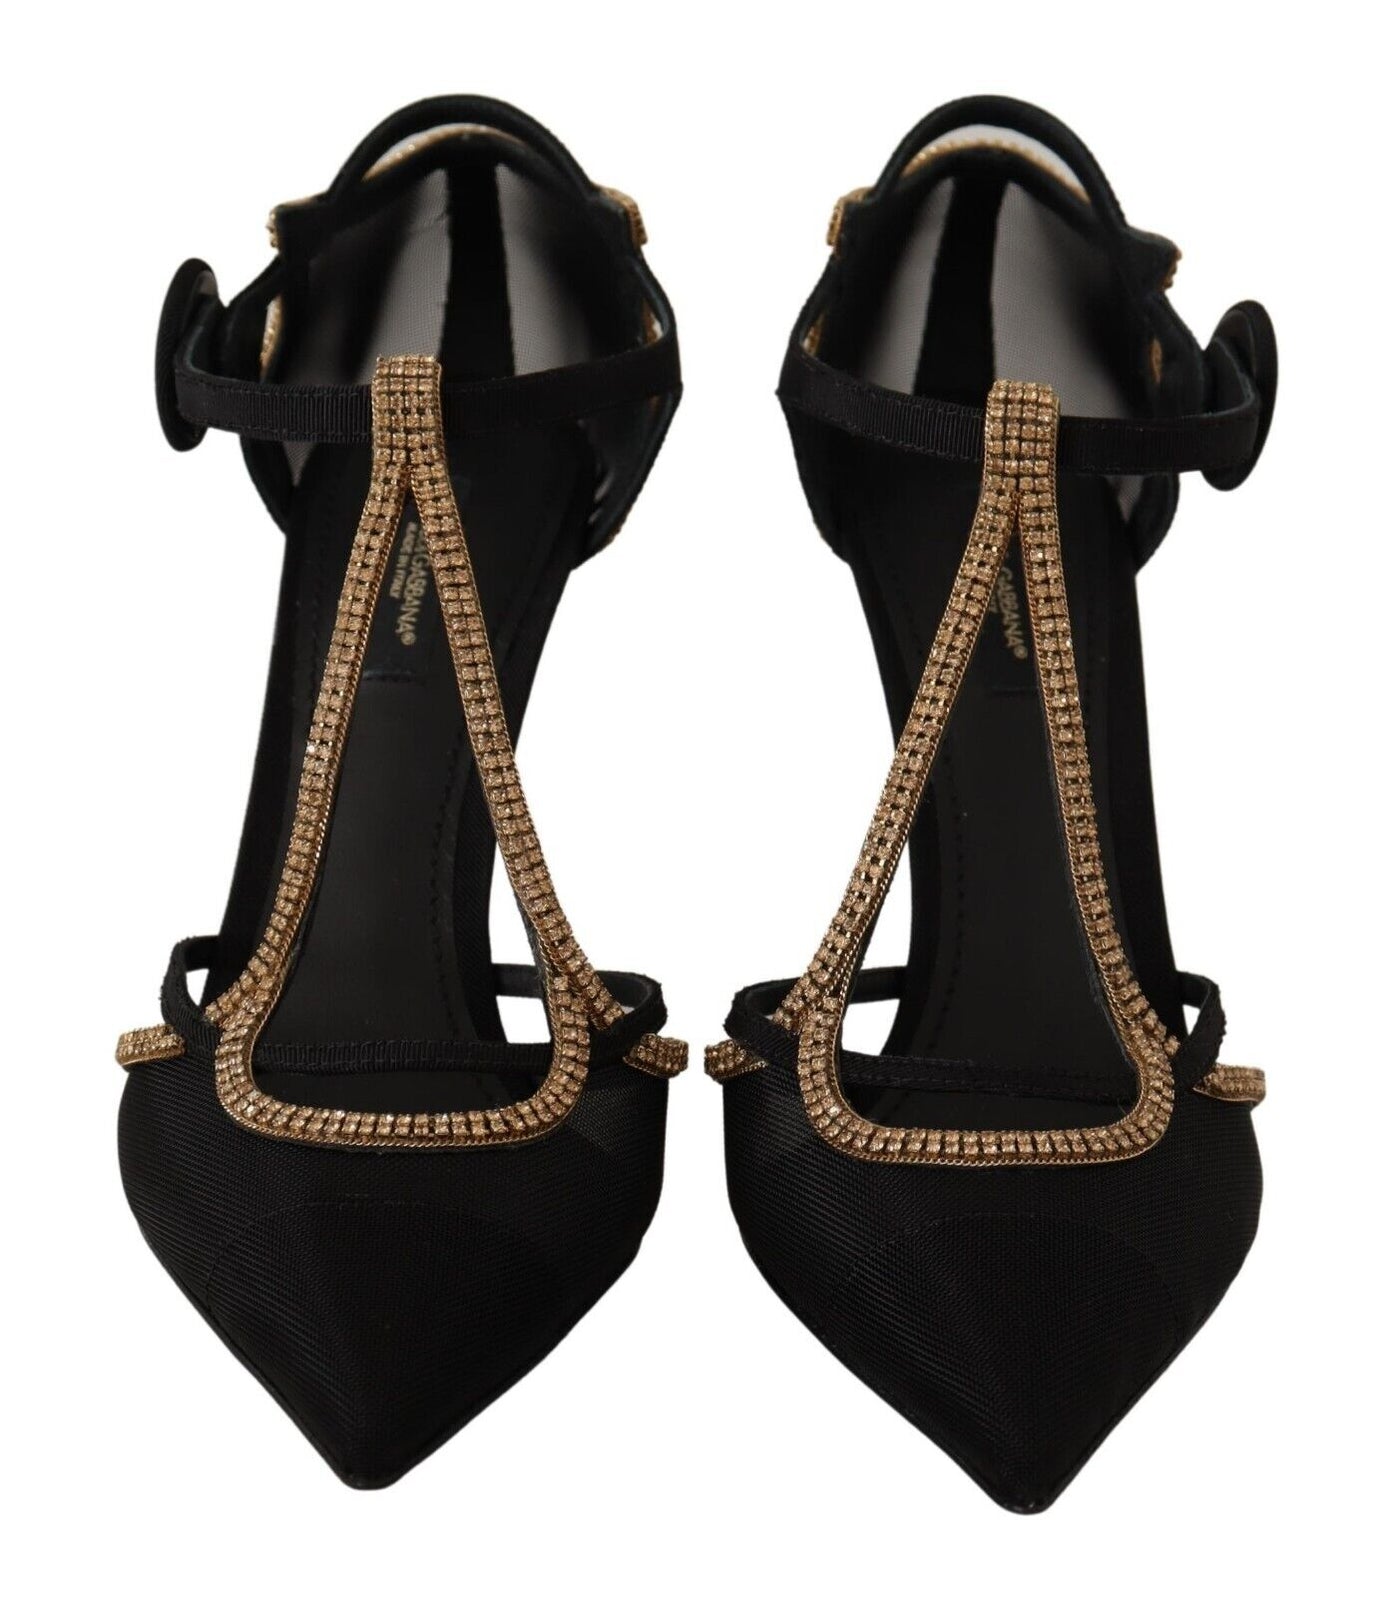 Black Crystal T-strap Heels Pumps Shoes